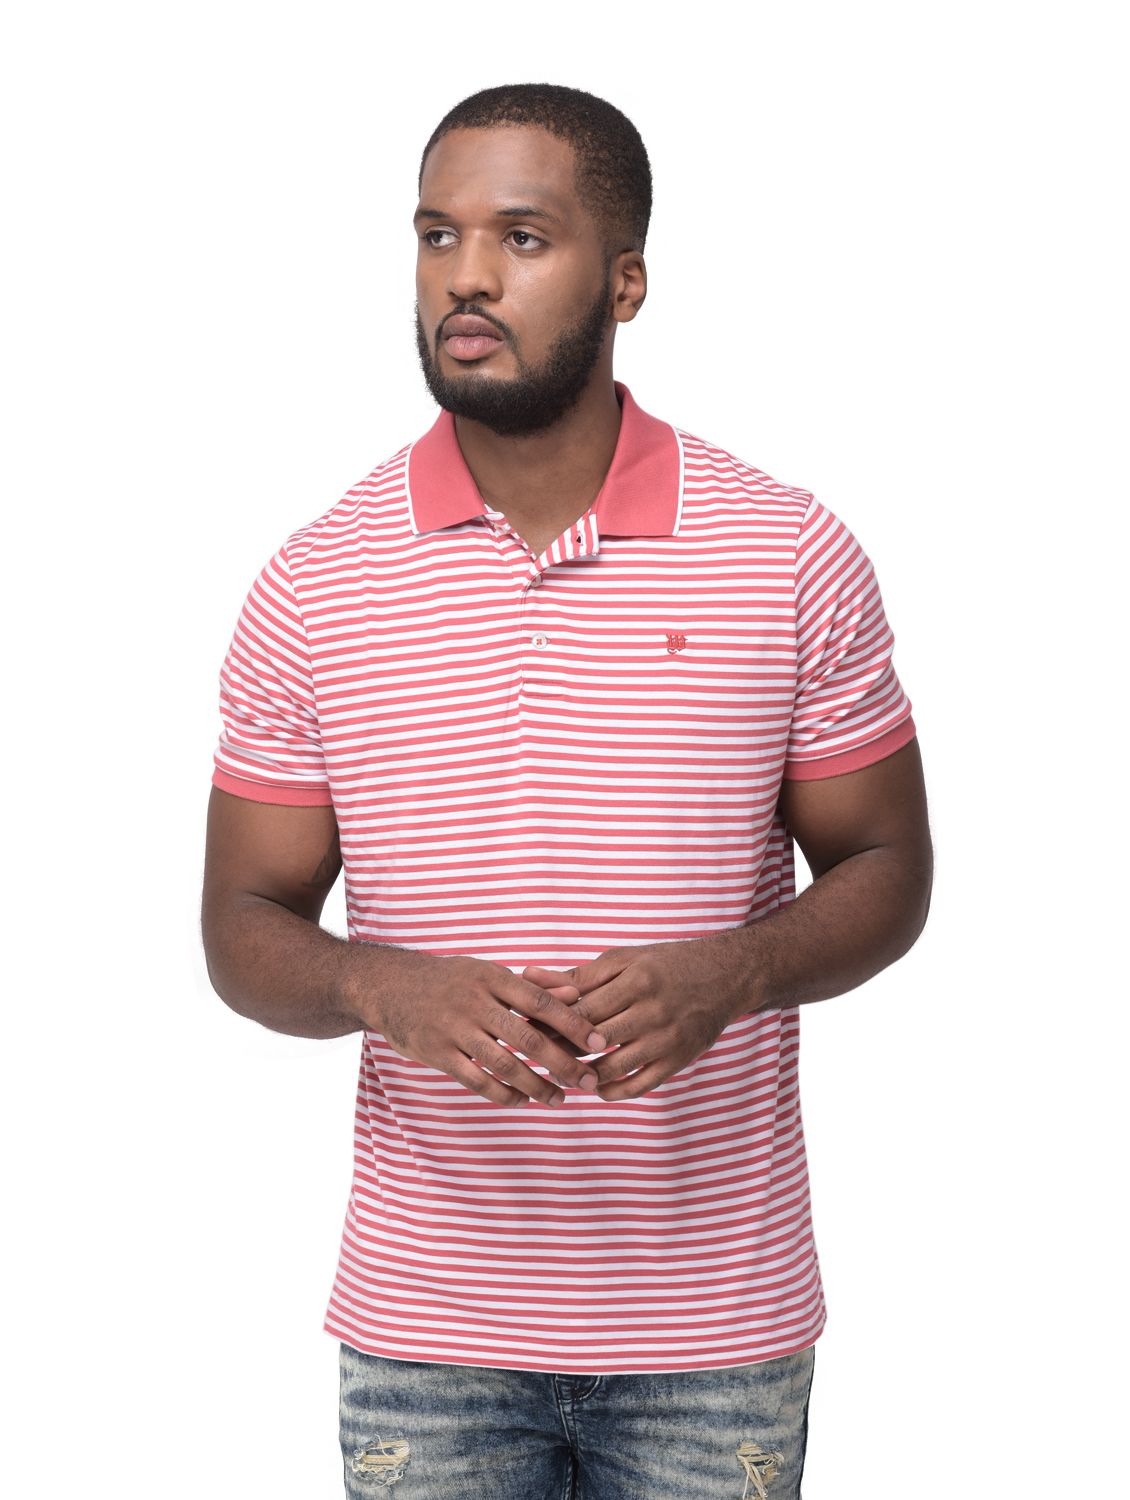 BERRY/WHITE striped polo neck t-shirt